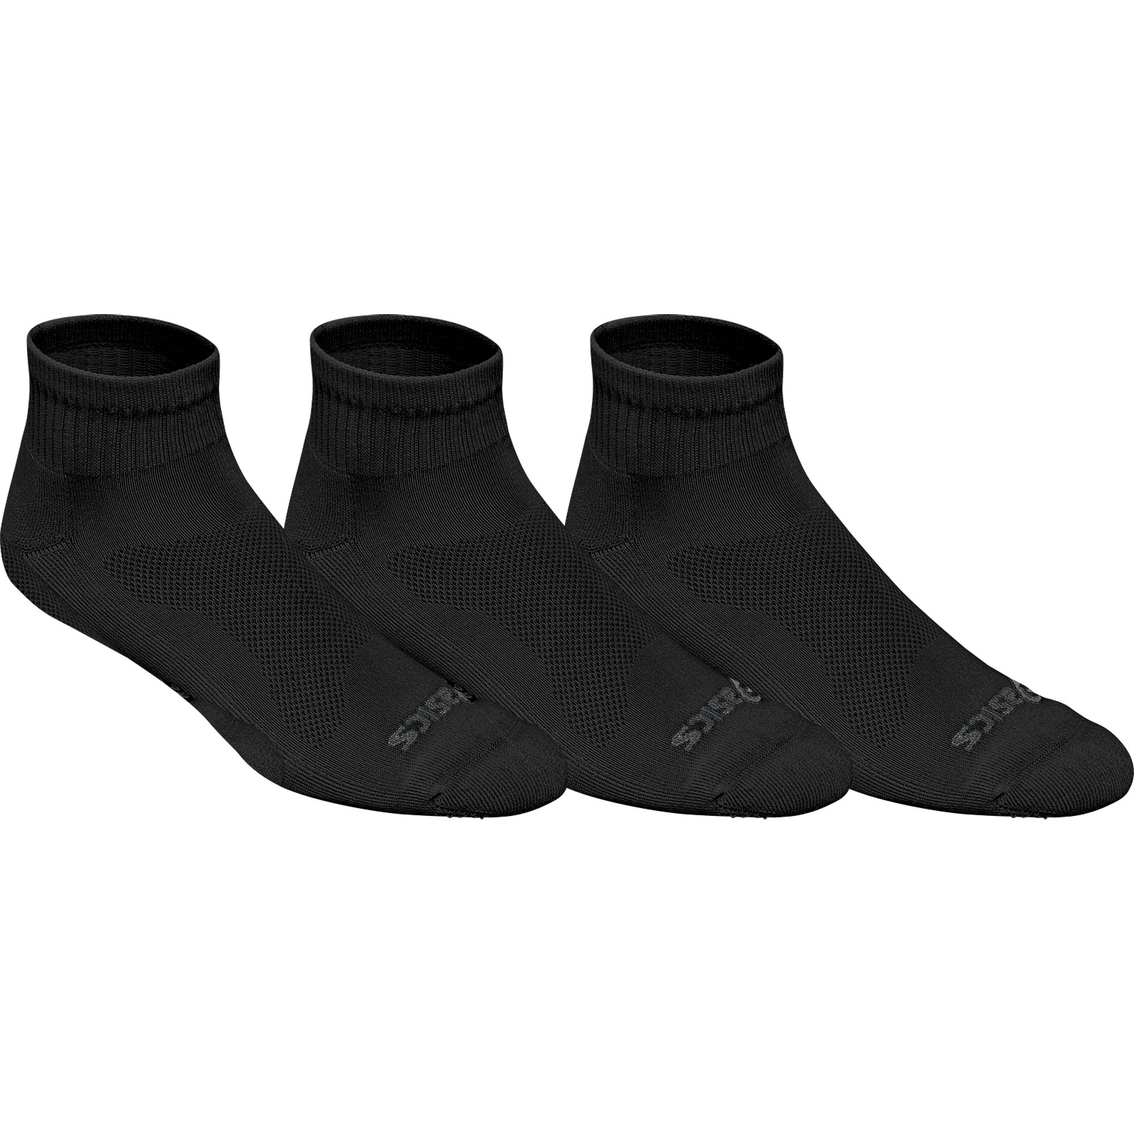 Asics Cushion Quarter Socks 3 Pk. | Socks | Clothing & Accessories ...